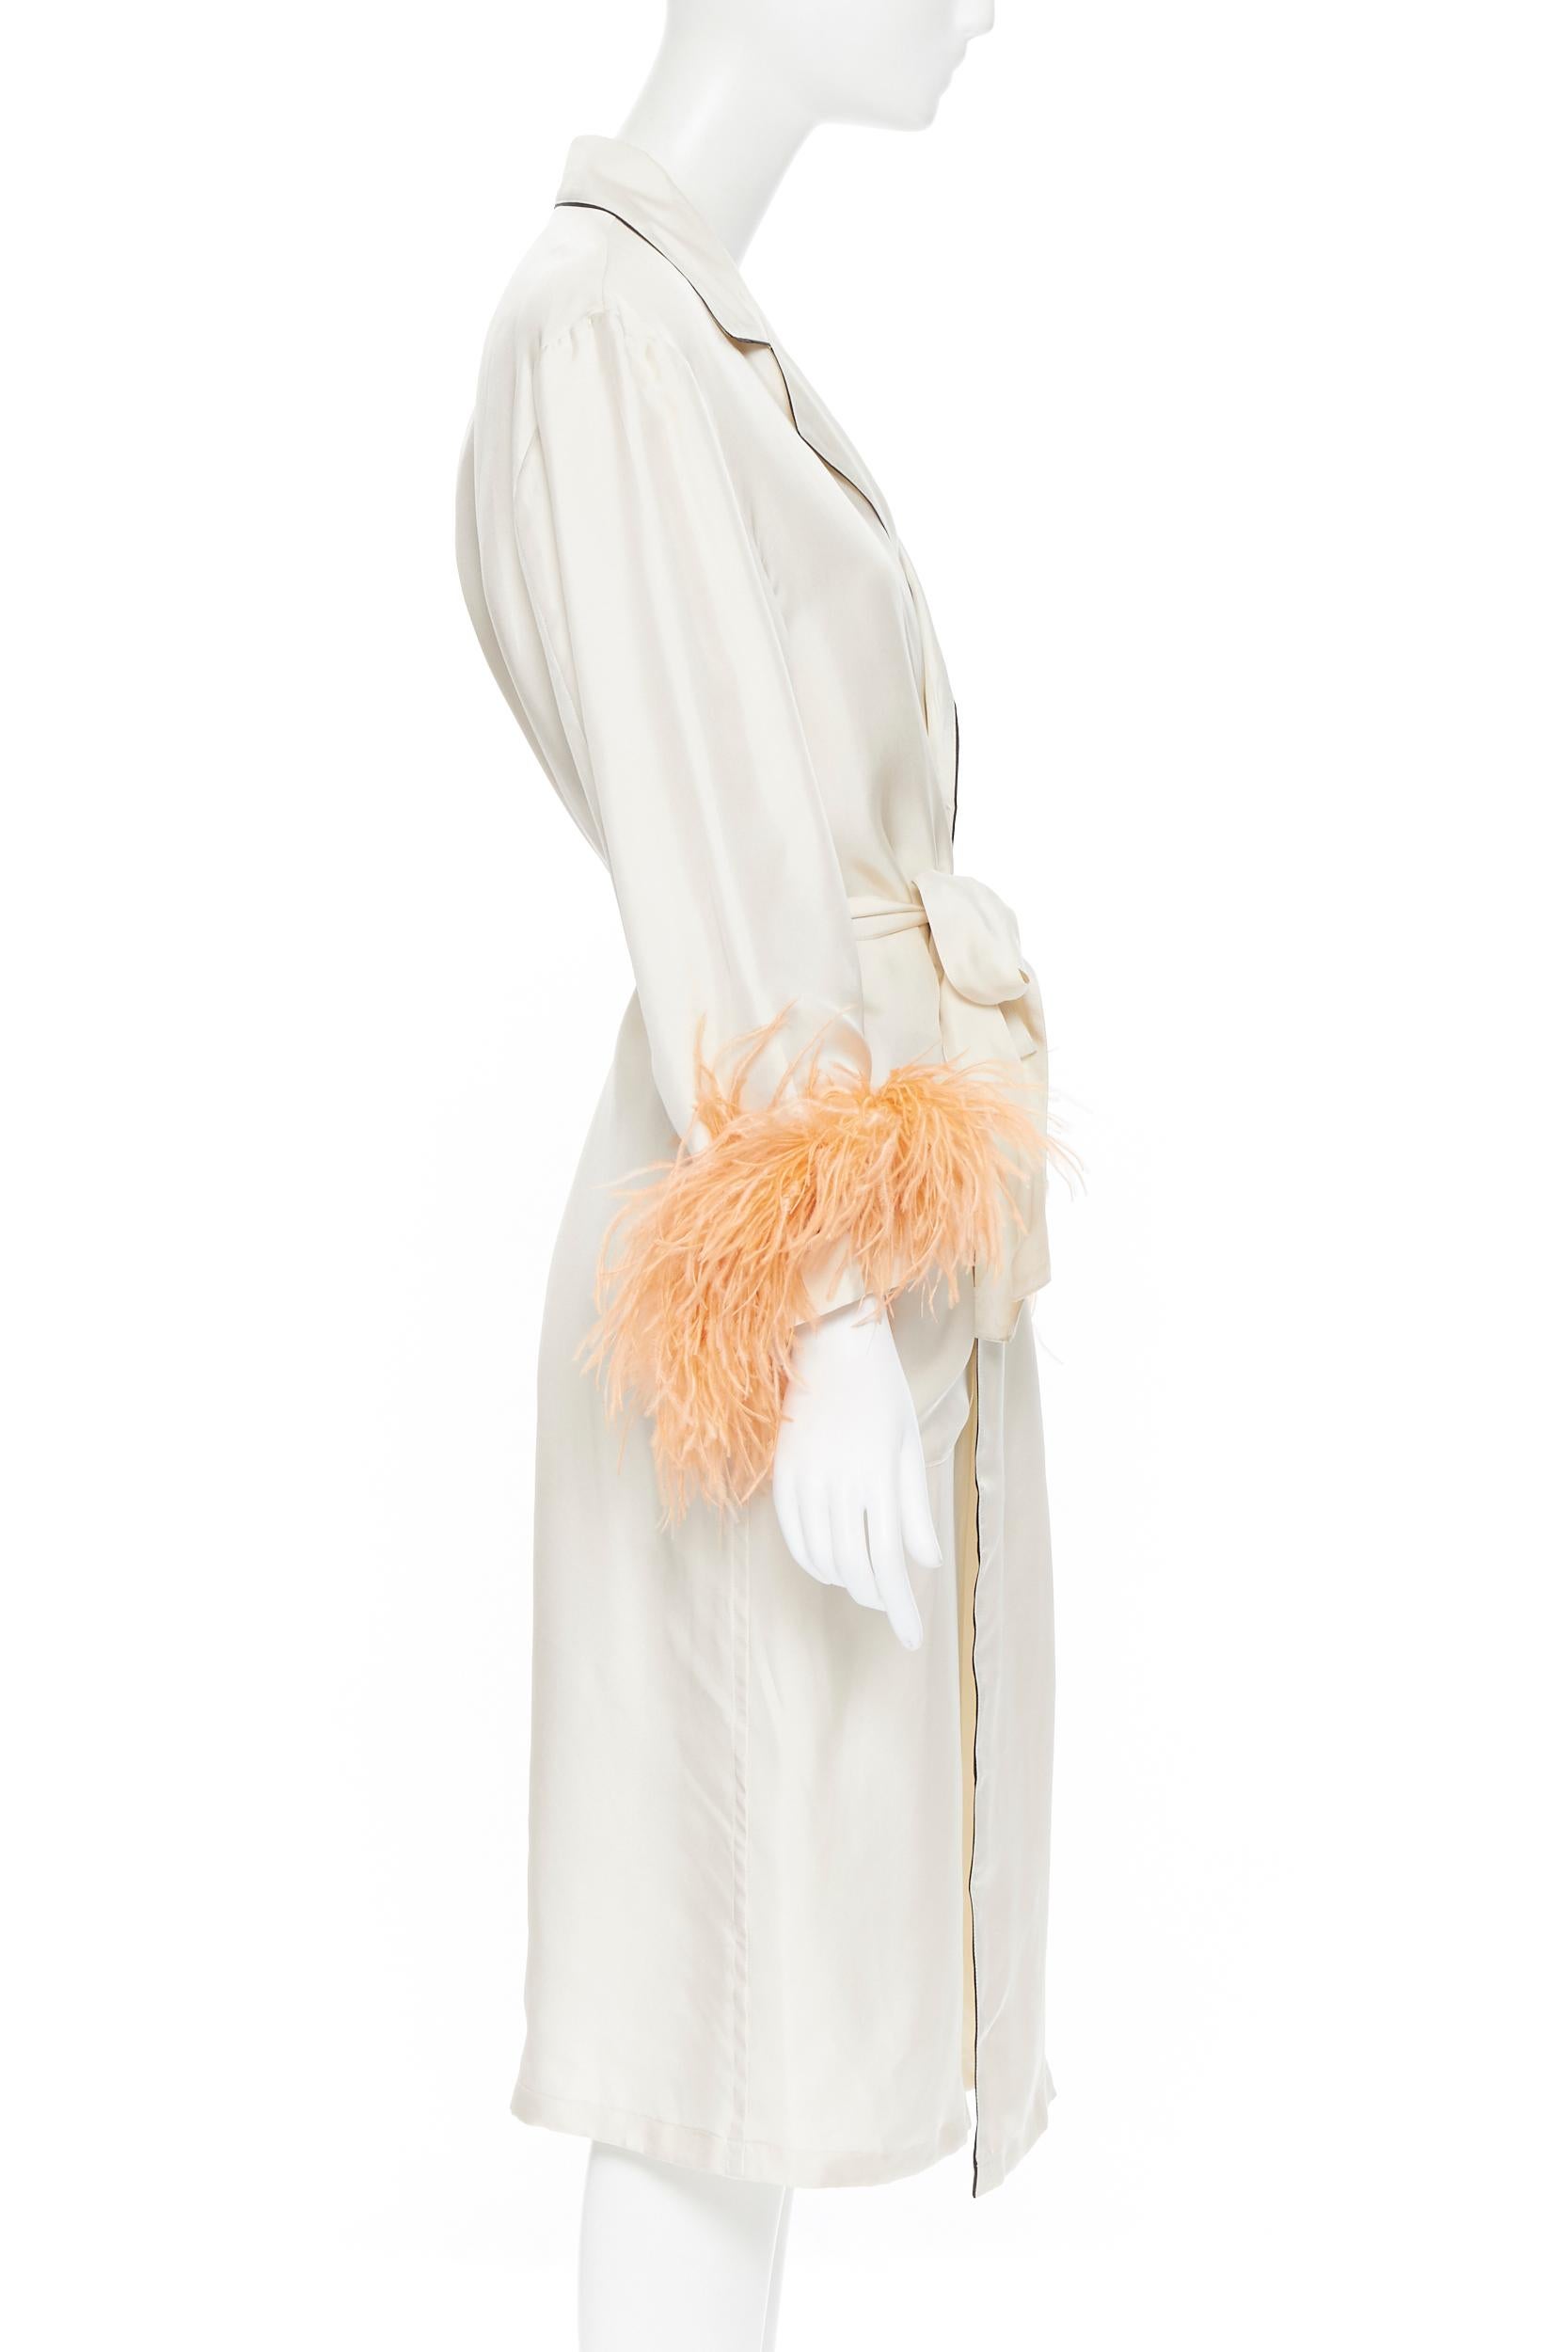 Beige new PRADA 100% silk cream black piping orange feather cuff robe jacket Rihanna M